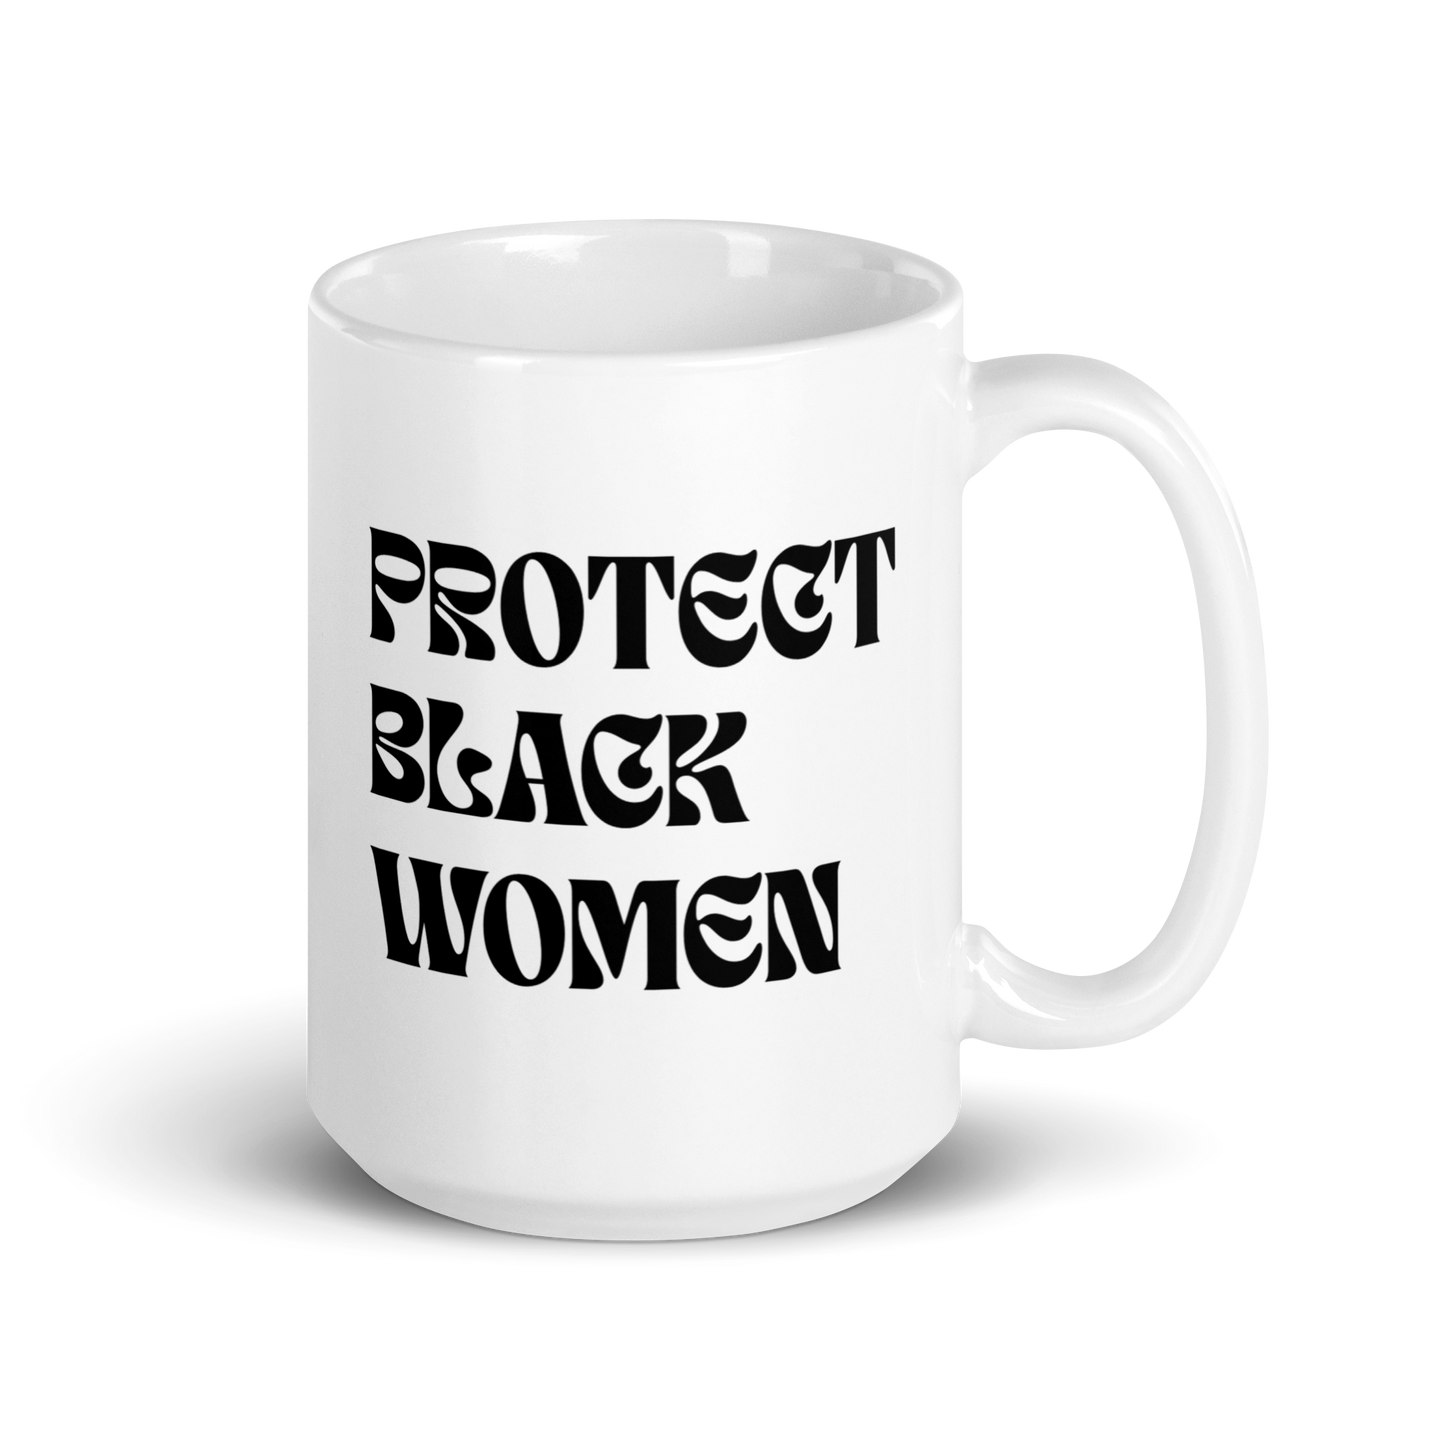 Protect Black Women Mug